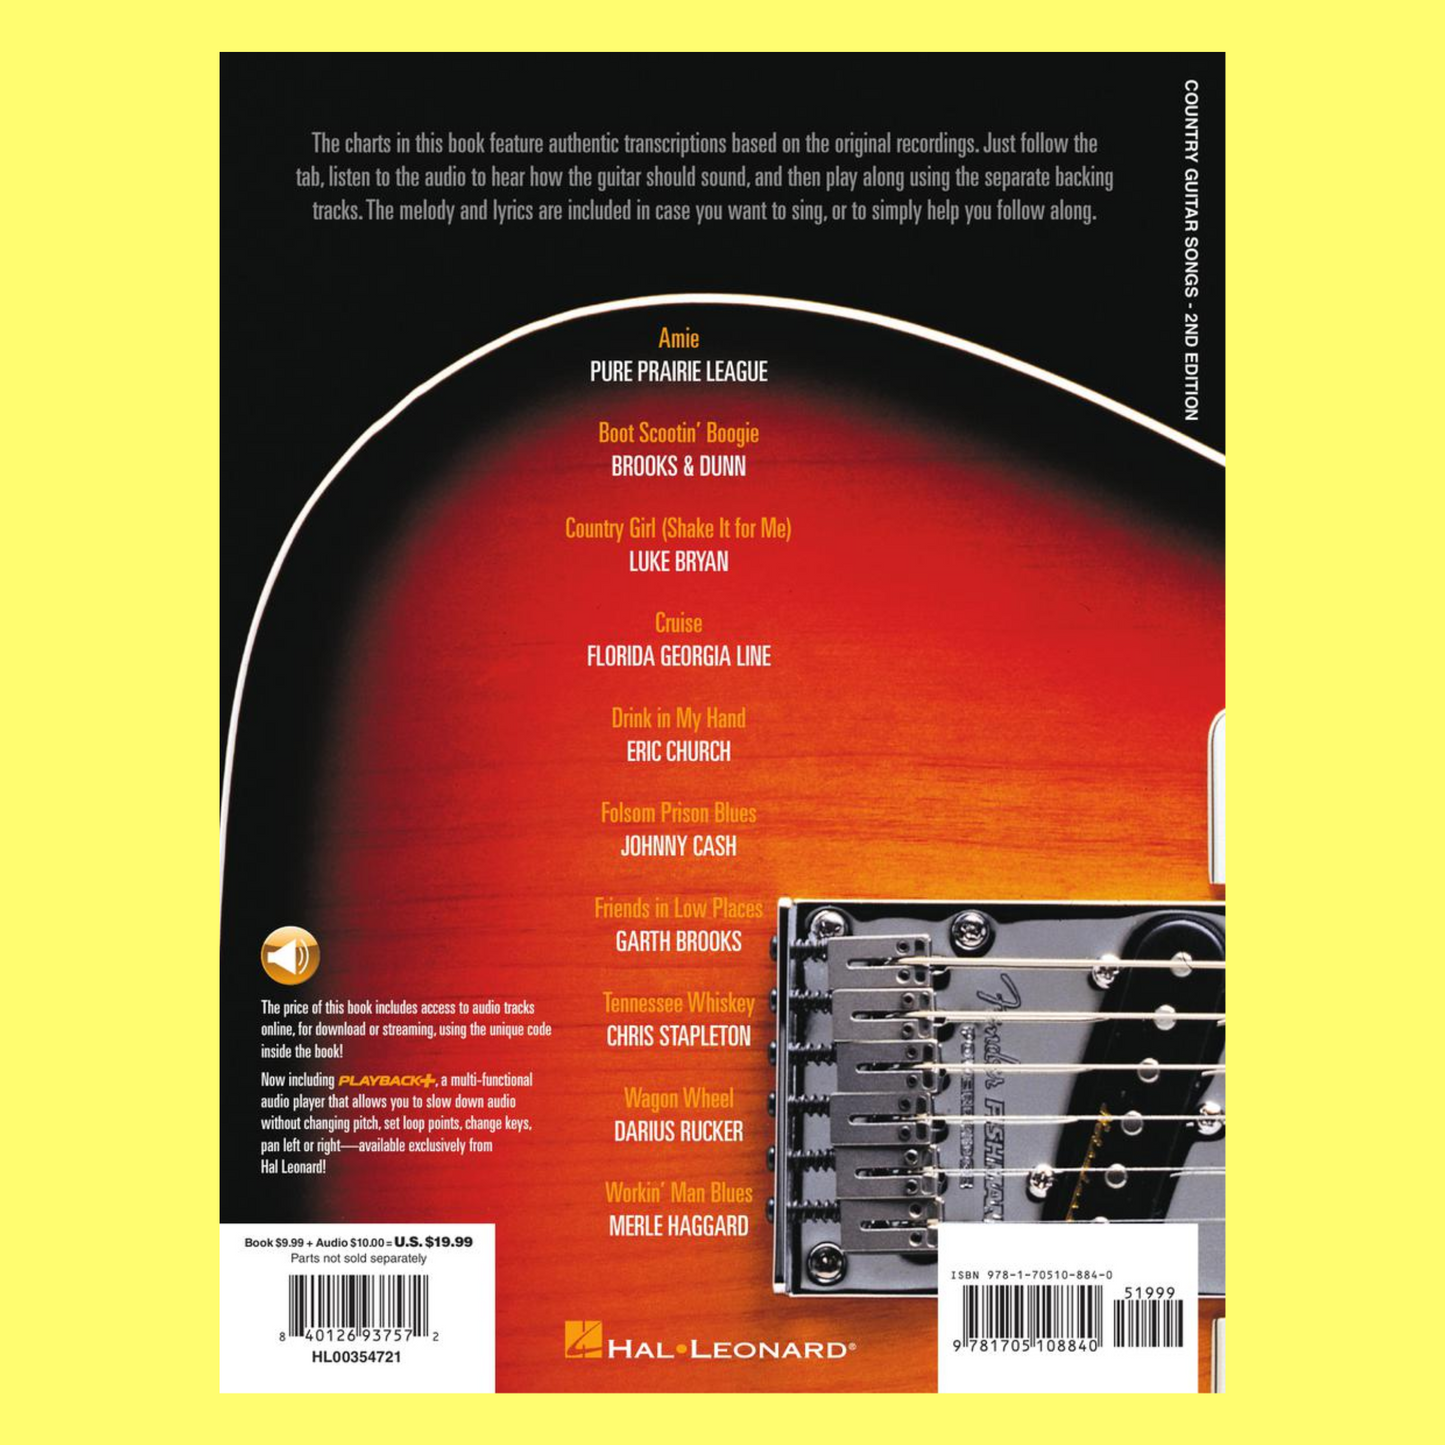 Hal Leonard Guitar Method - Country Guitar Songbook (Book/Ola) 2nd Edition